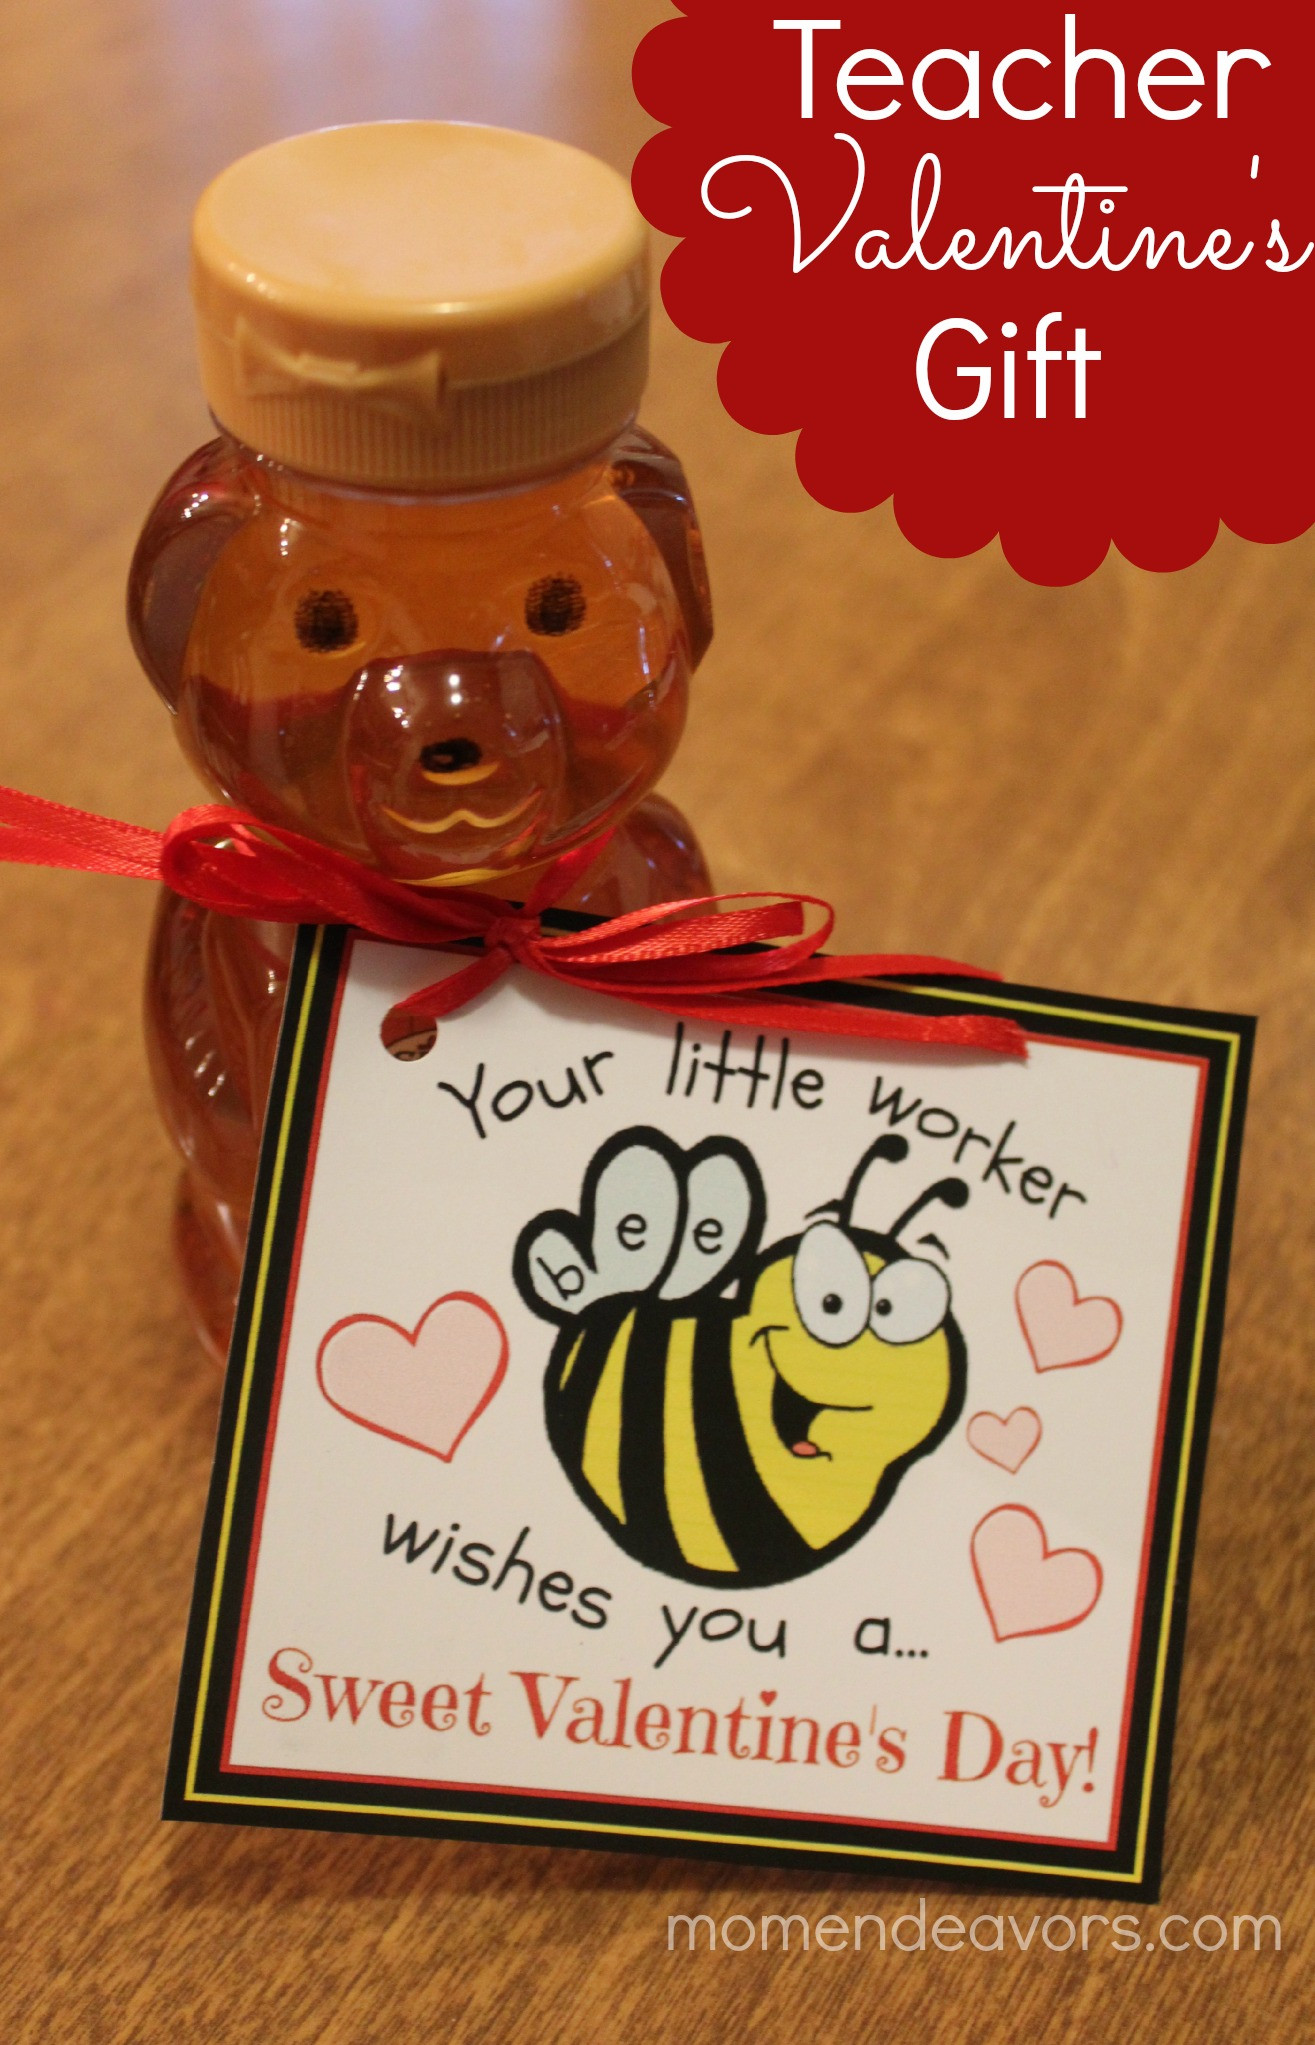 Valentine'S Day Gift Ideas For Teachers
 Bee themed Teacher Valentine’s Gift